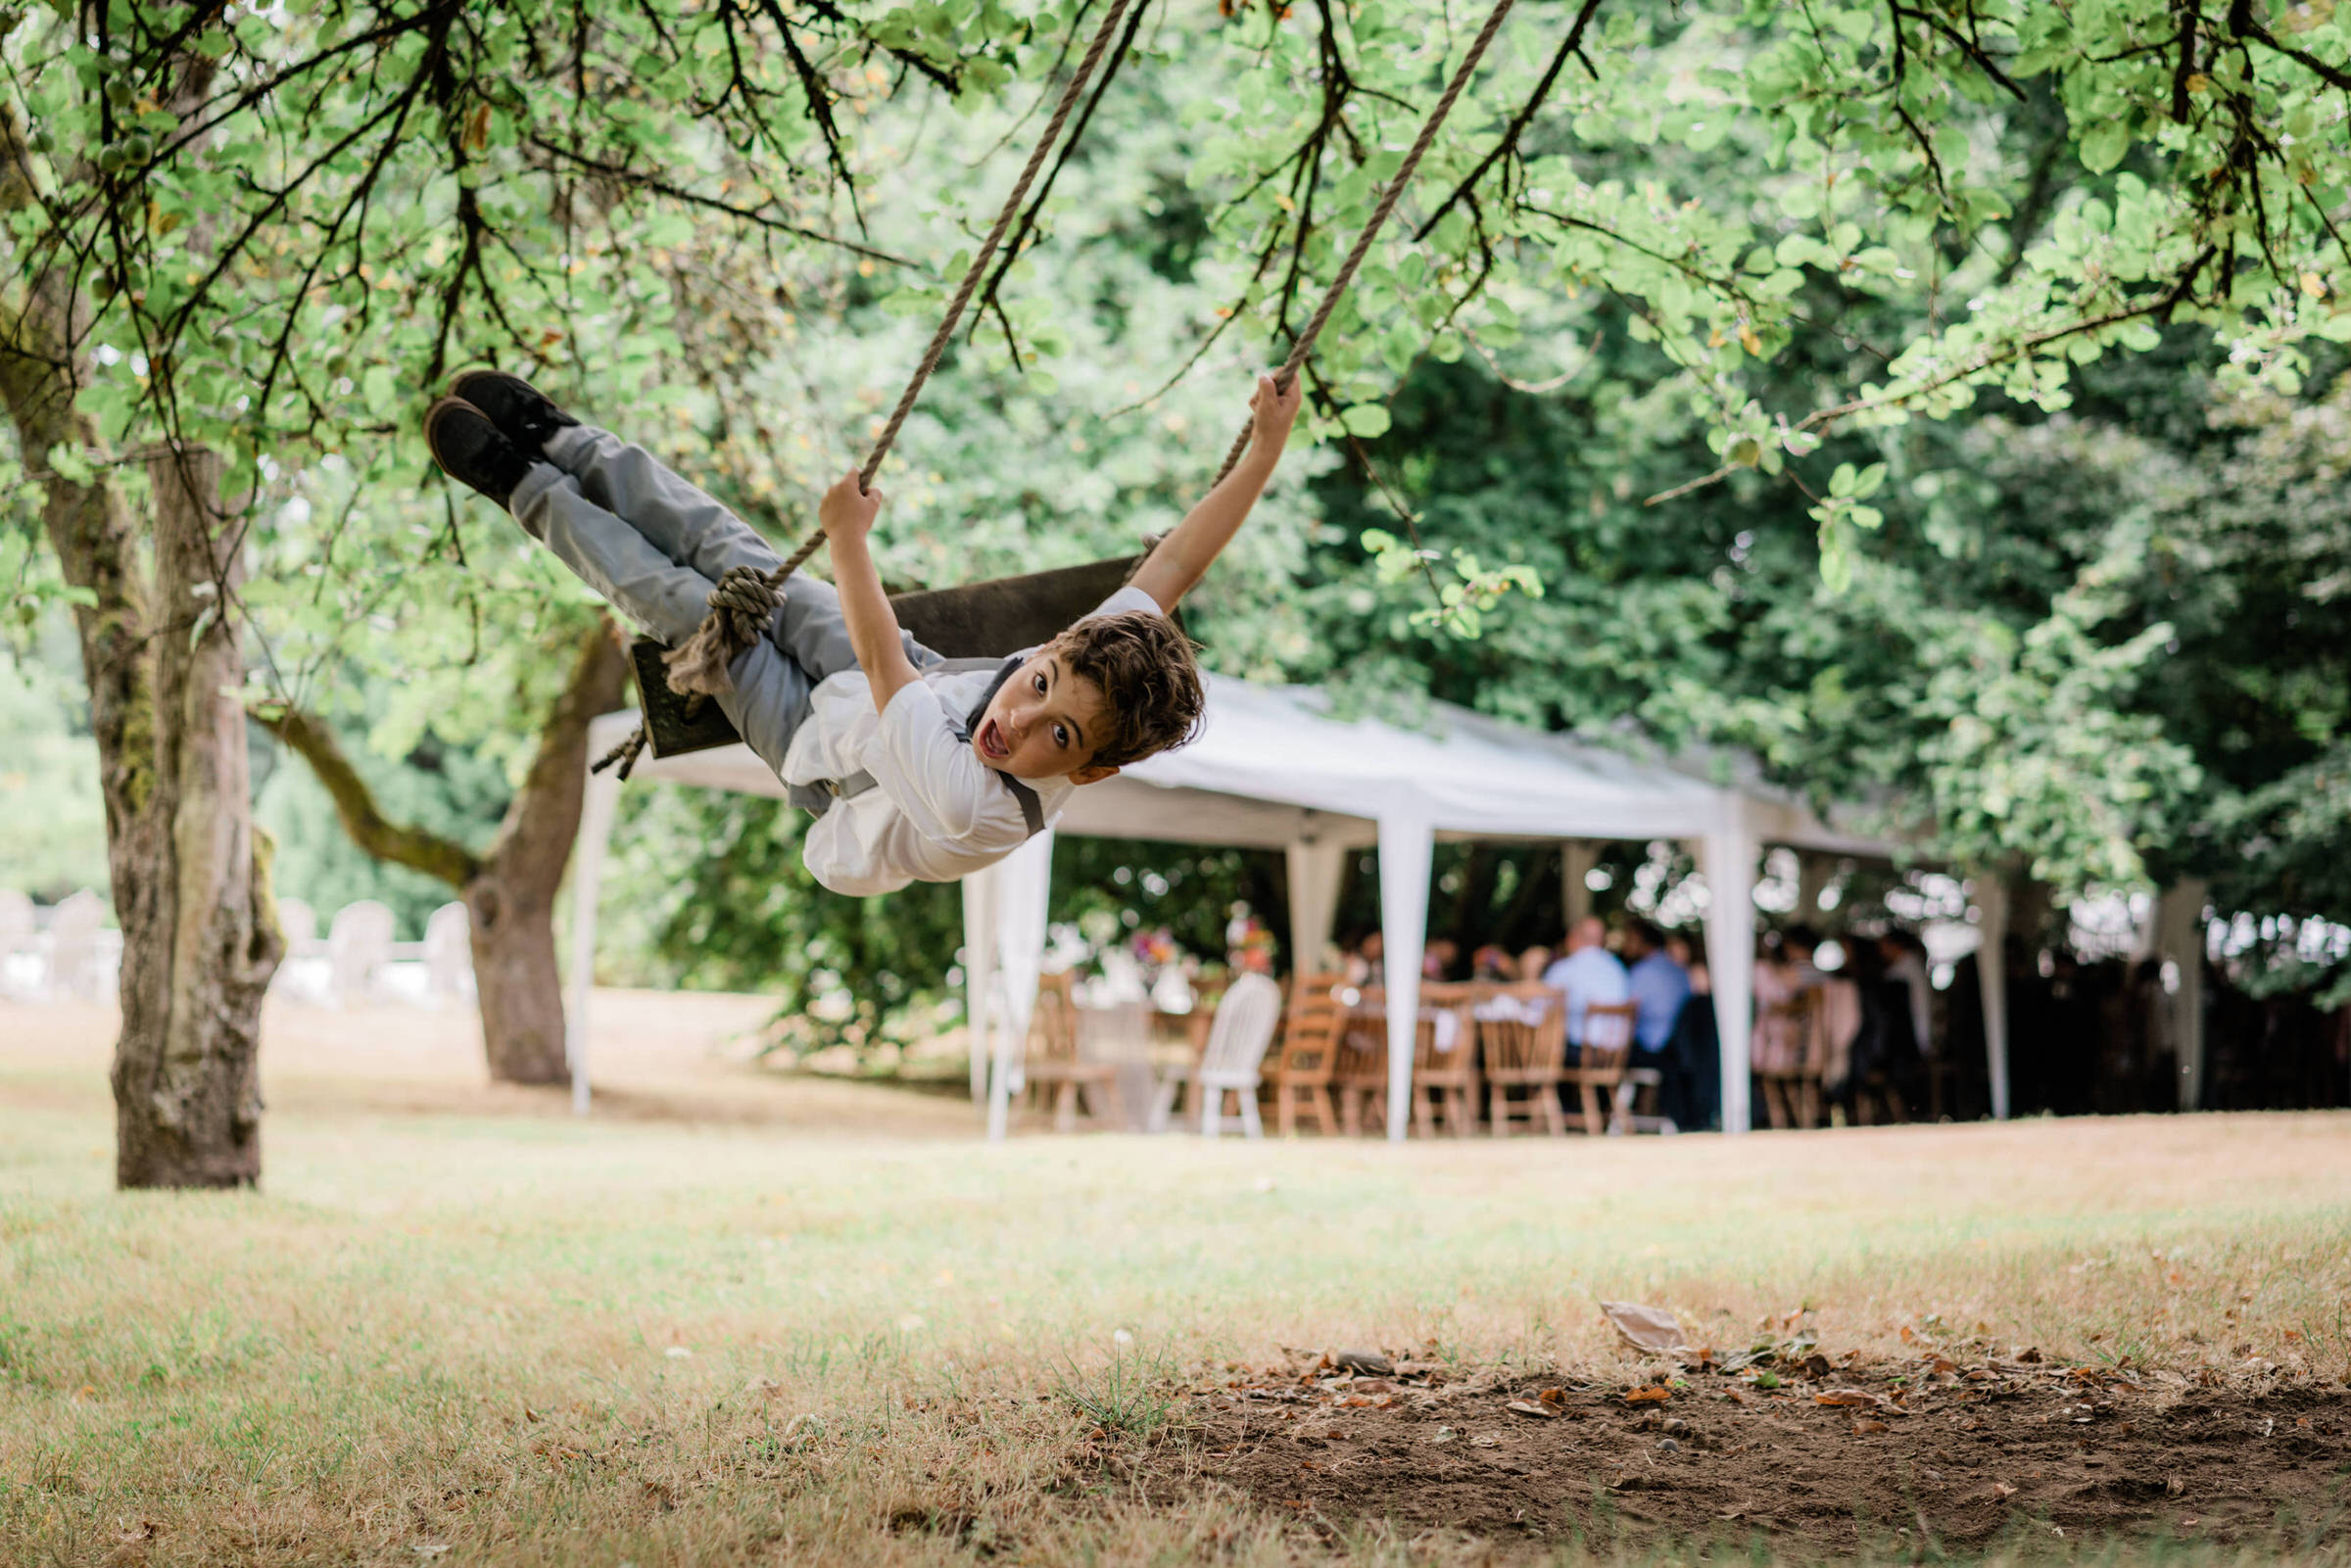 Wayfarer Whidbey Island Wedding: A wedding groomsmen swings from a nearby tree at the wedding